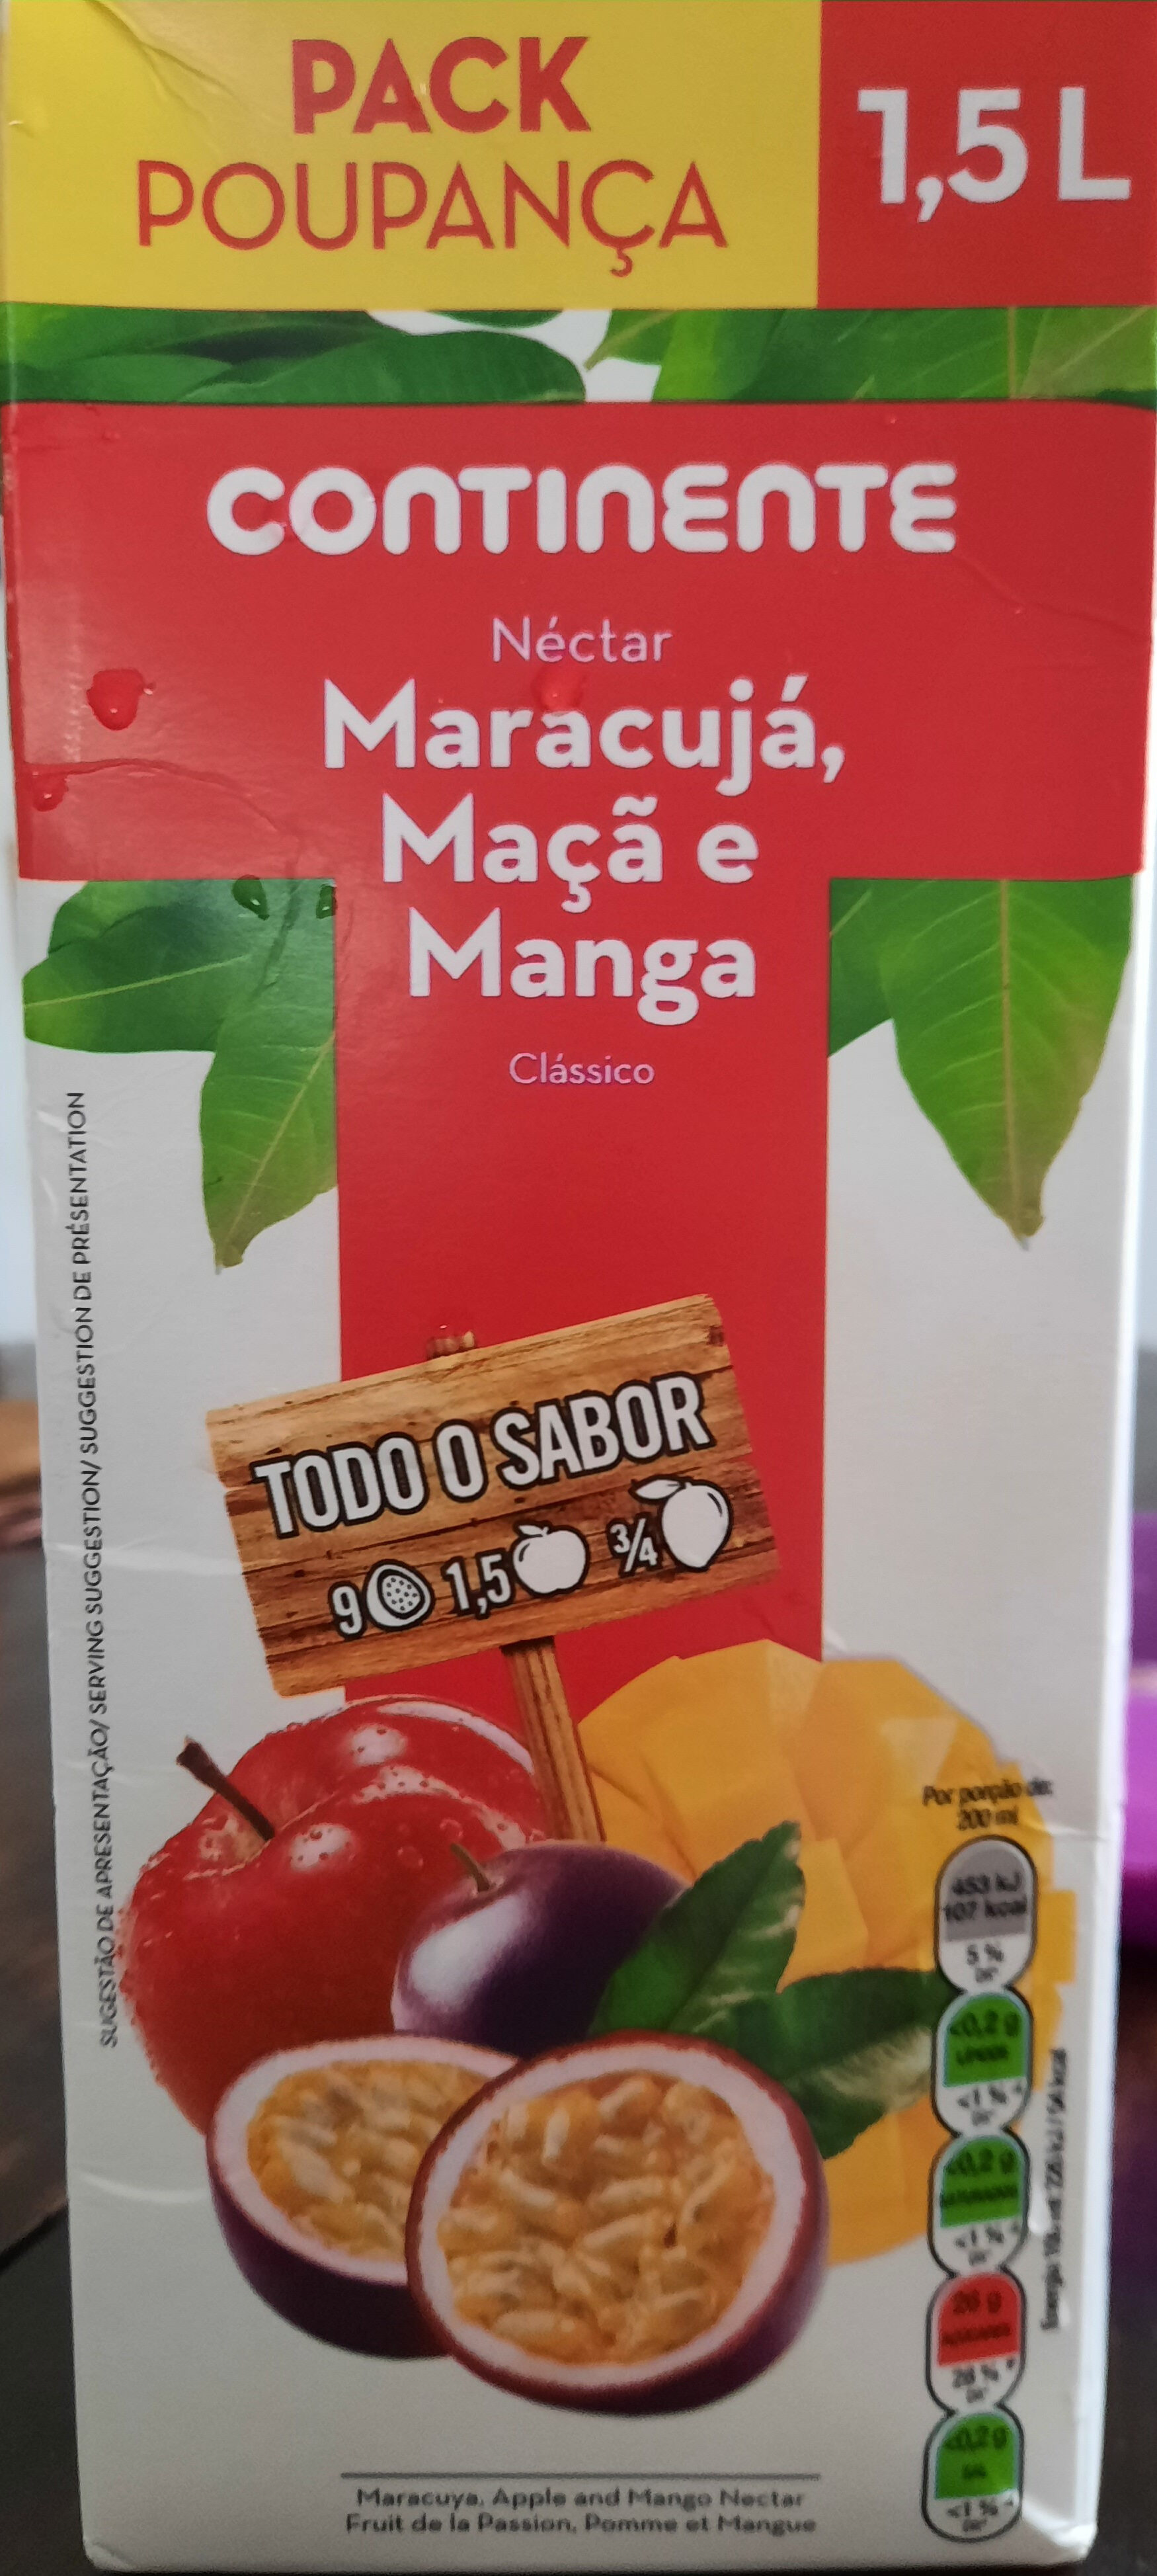 Néctar Maracujá, Maçã e Manga Clássico - Produto